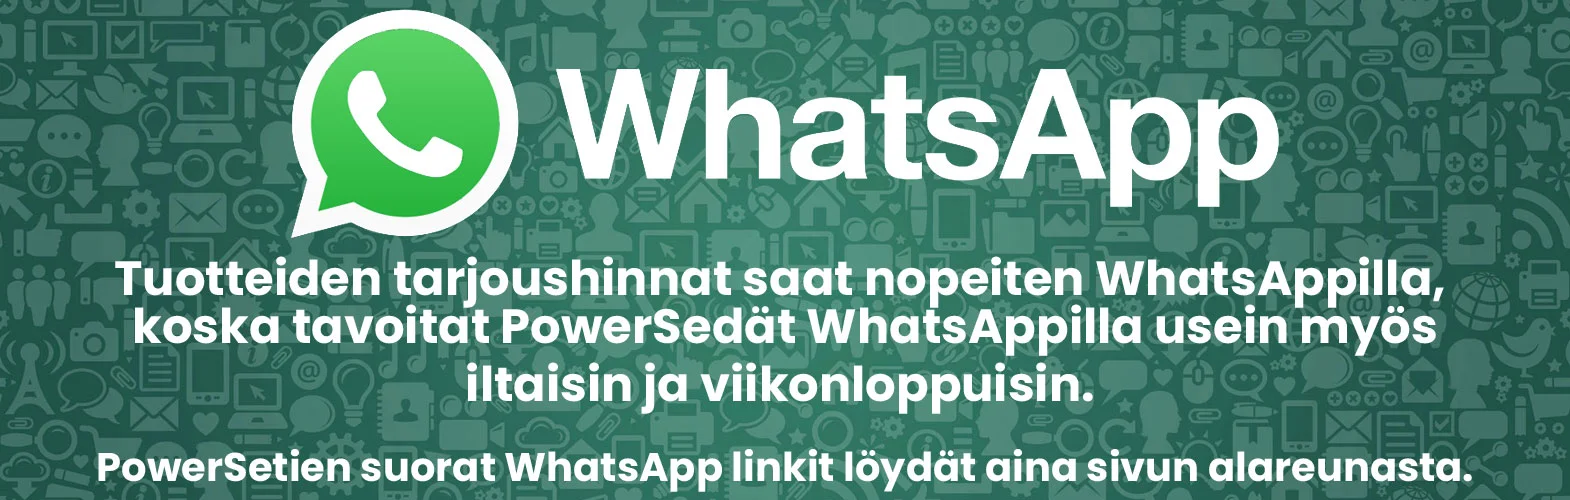 banner-whatsapp2